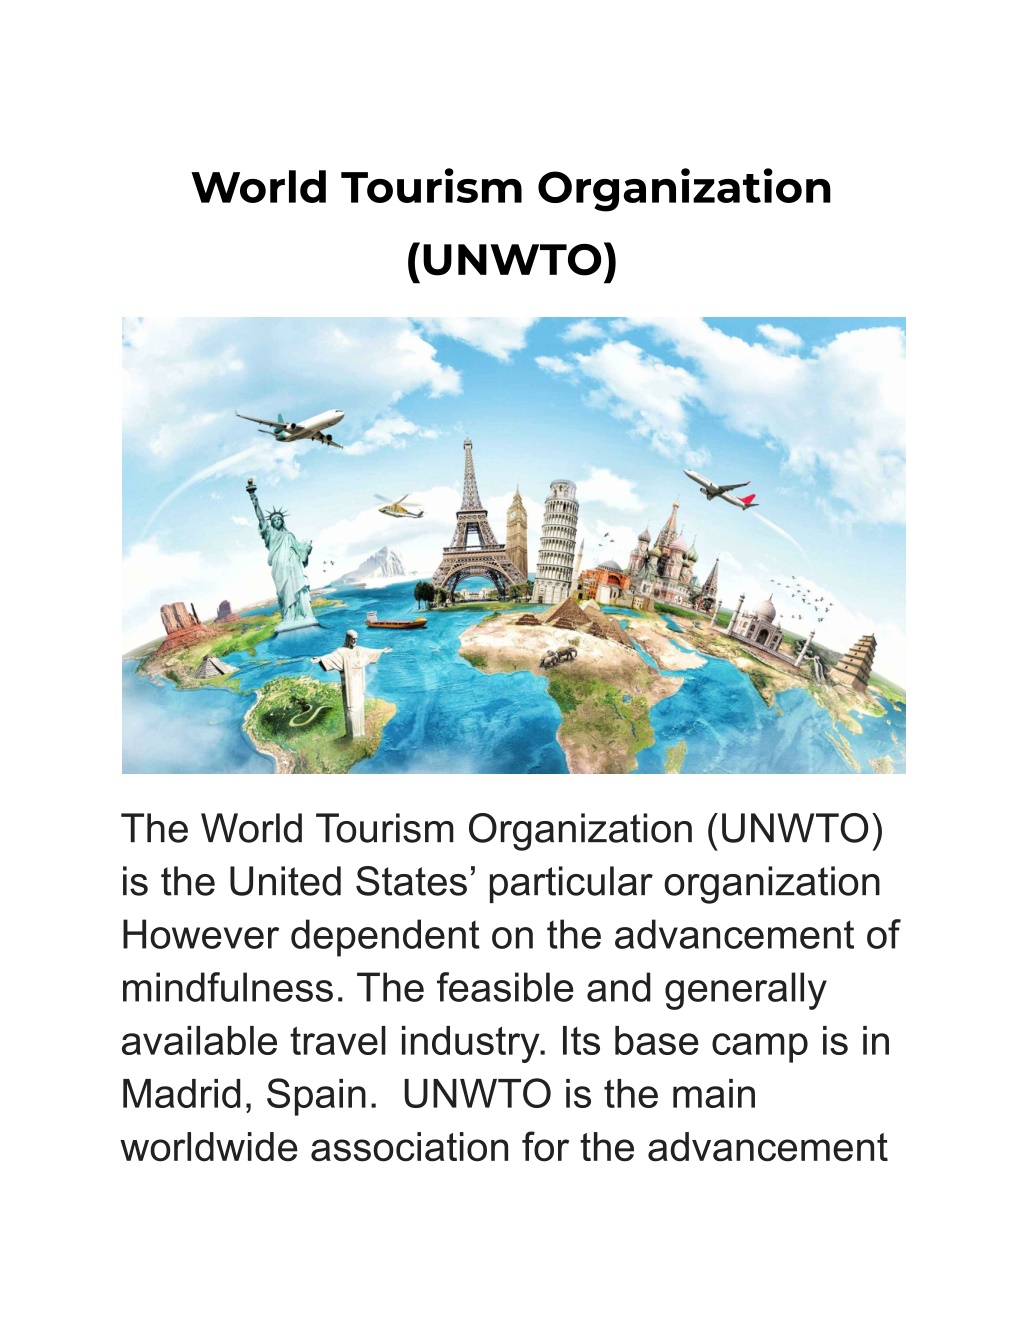 jelaskan apa itu world tourism organization